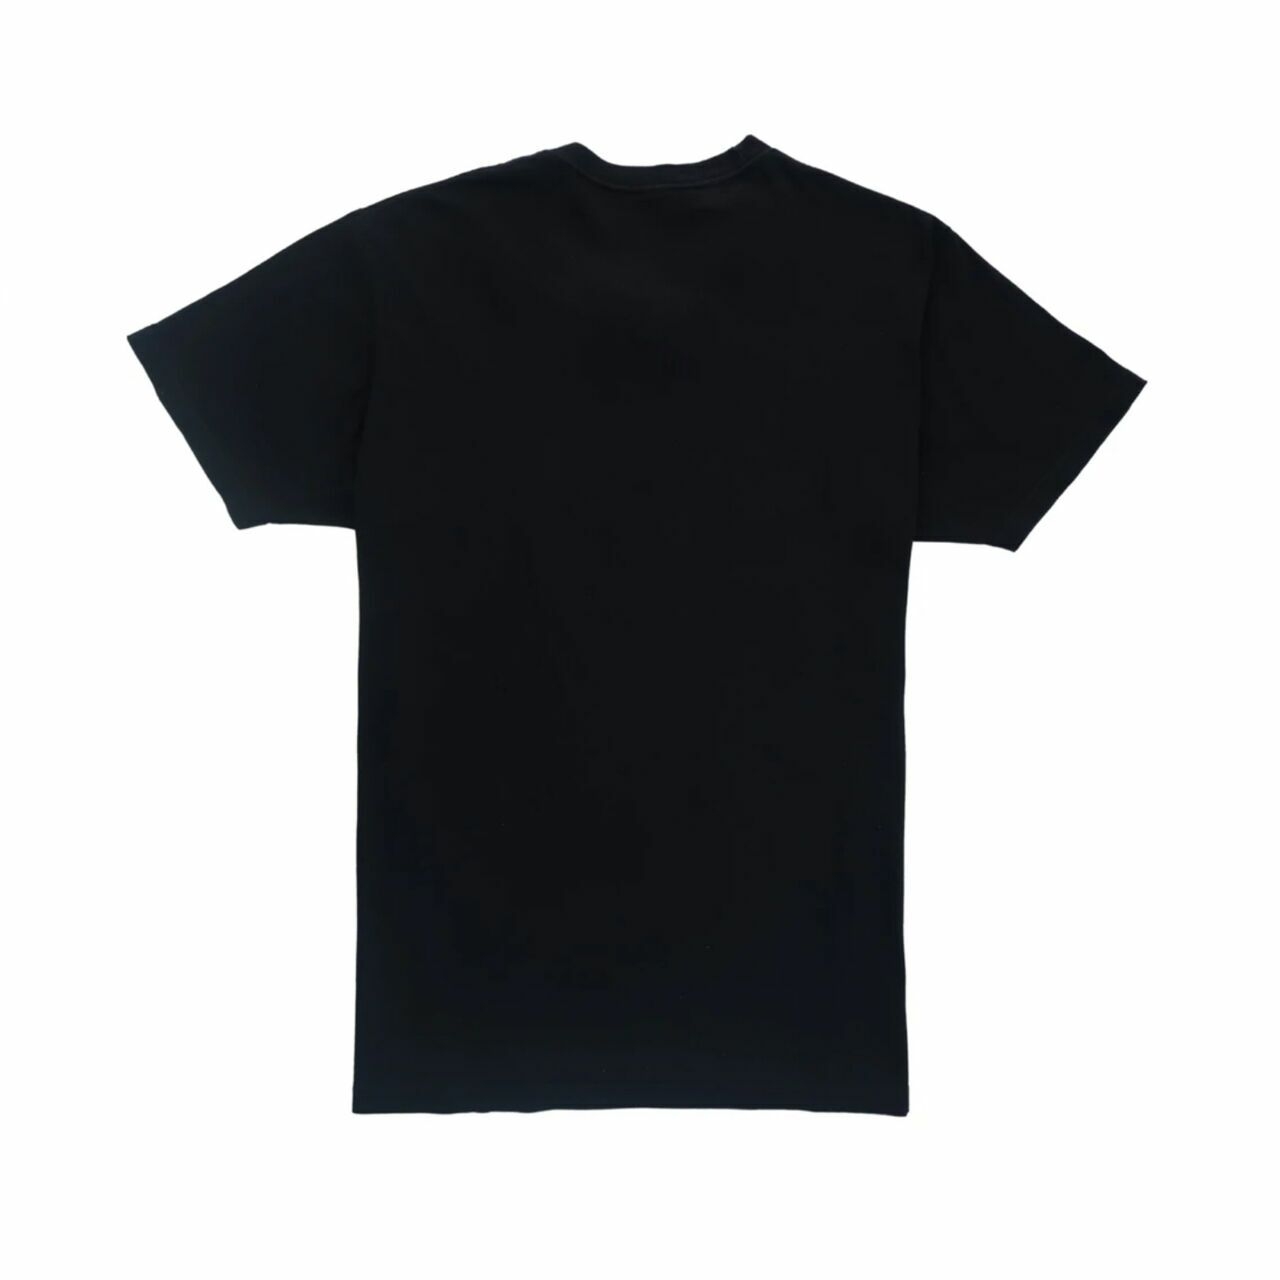 Supreme x Undercover Black Anatomy T-Shirt